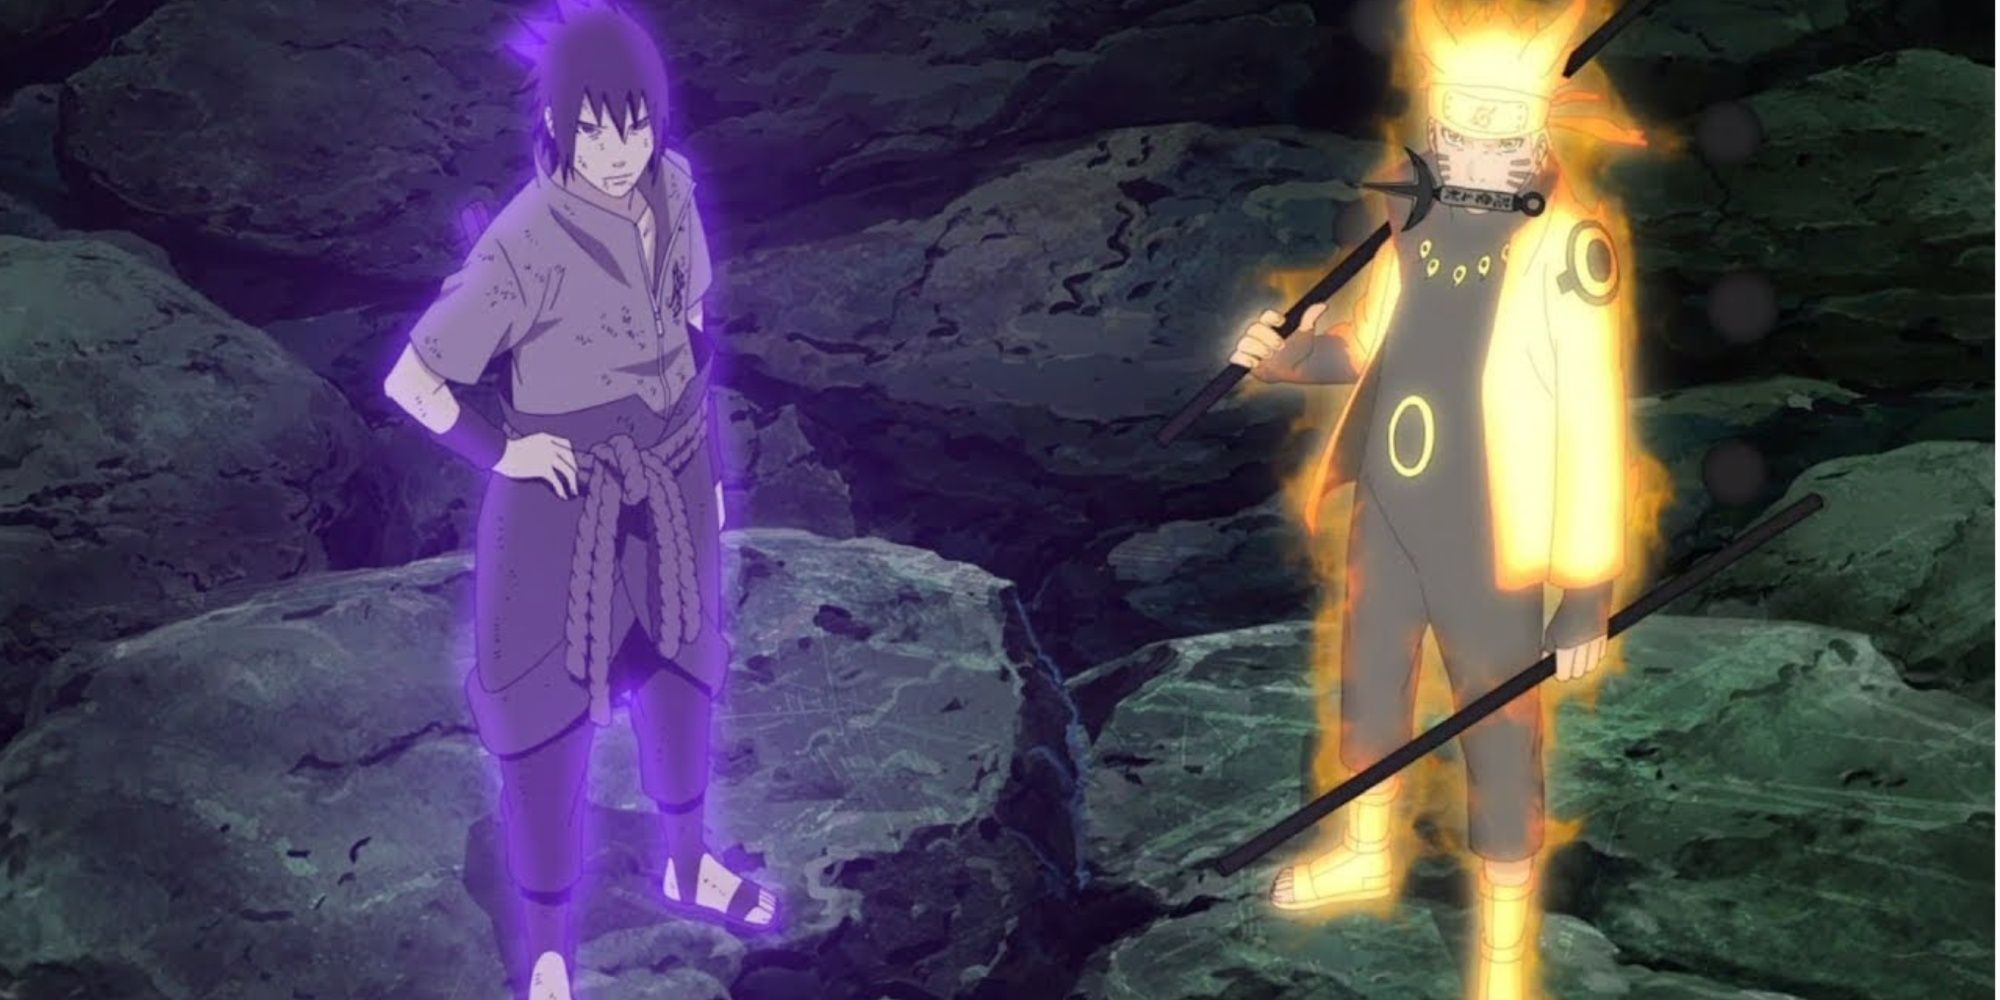 Naruto and Sasuke vs. Madara – The Theme Of Power And Choice